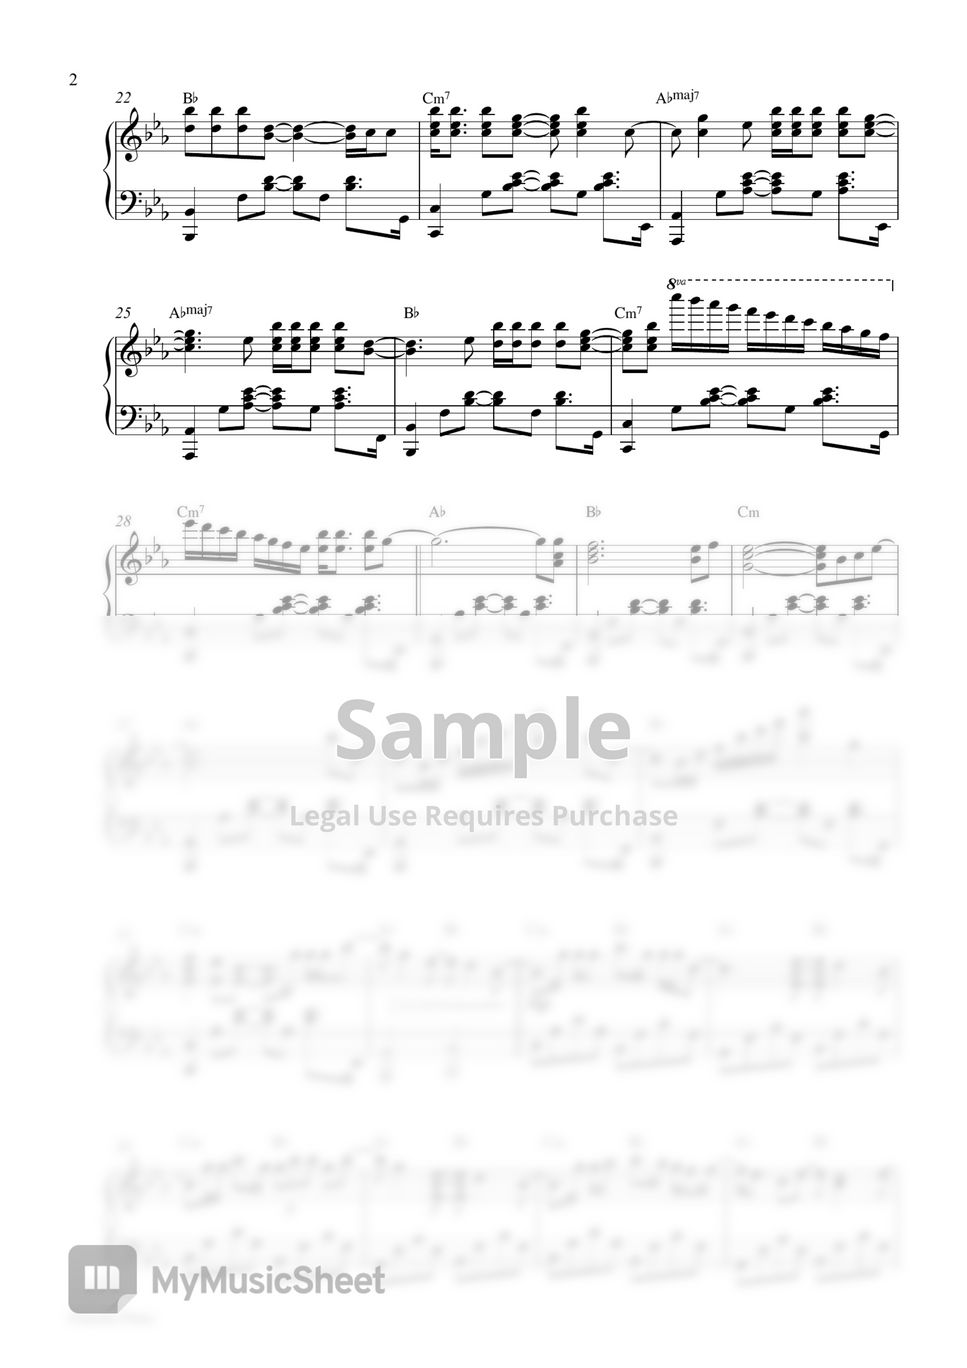 Kate Bush - Running Up That (Stranger Things Soundtrack) (Piano Sheet) by Pianella Piano